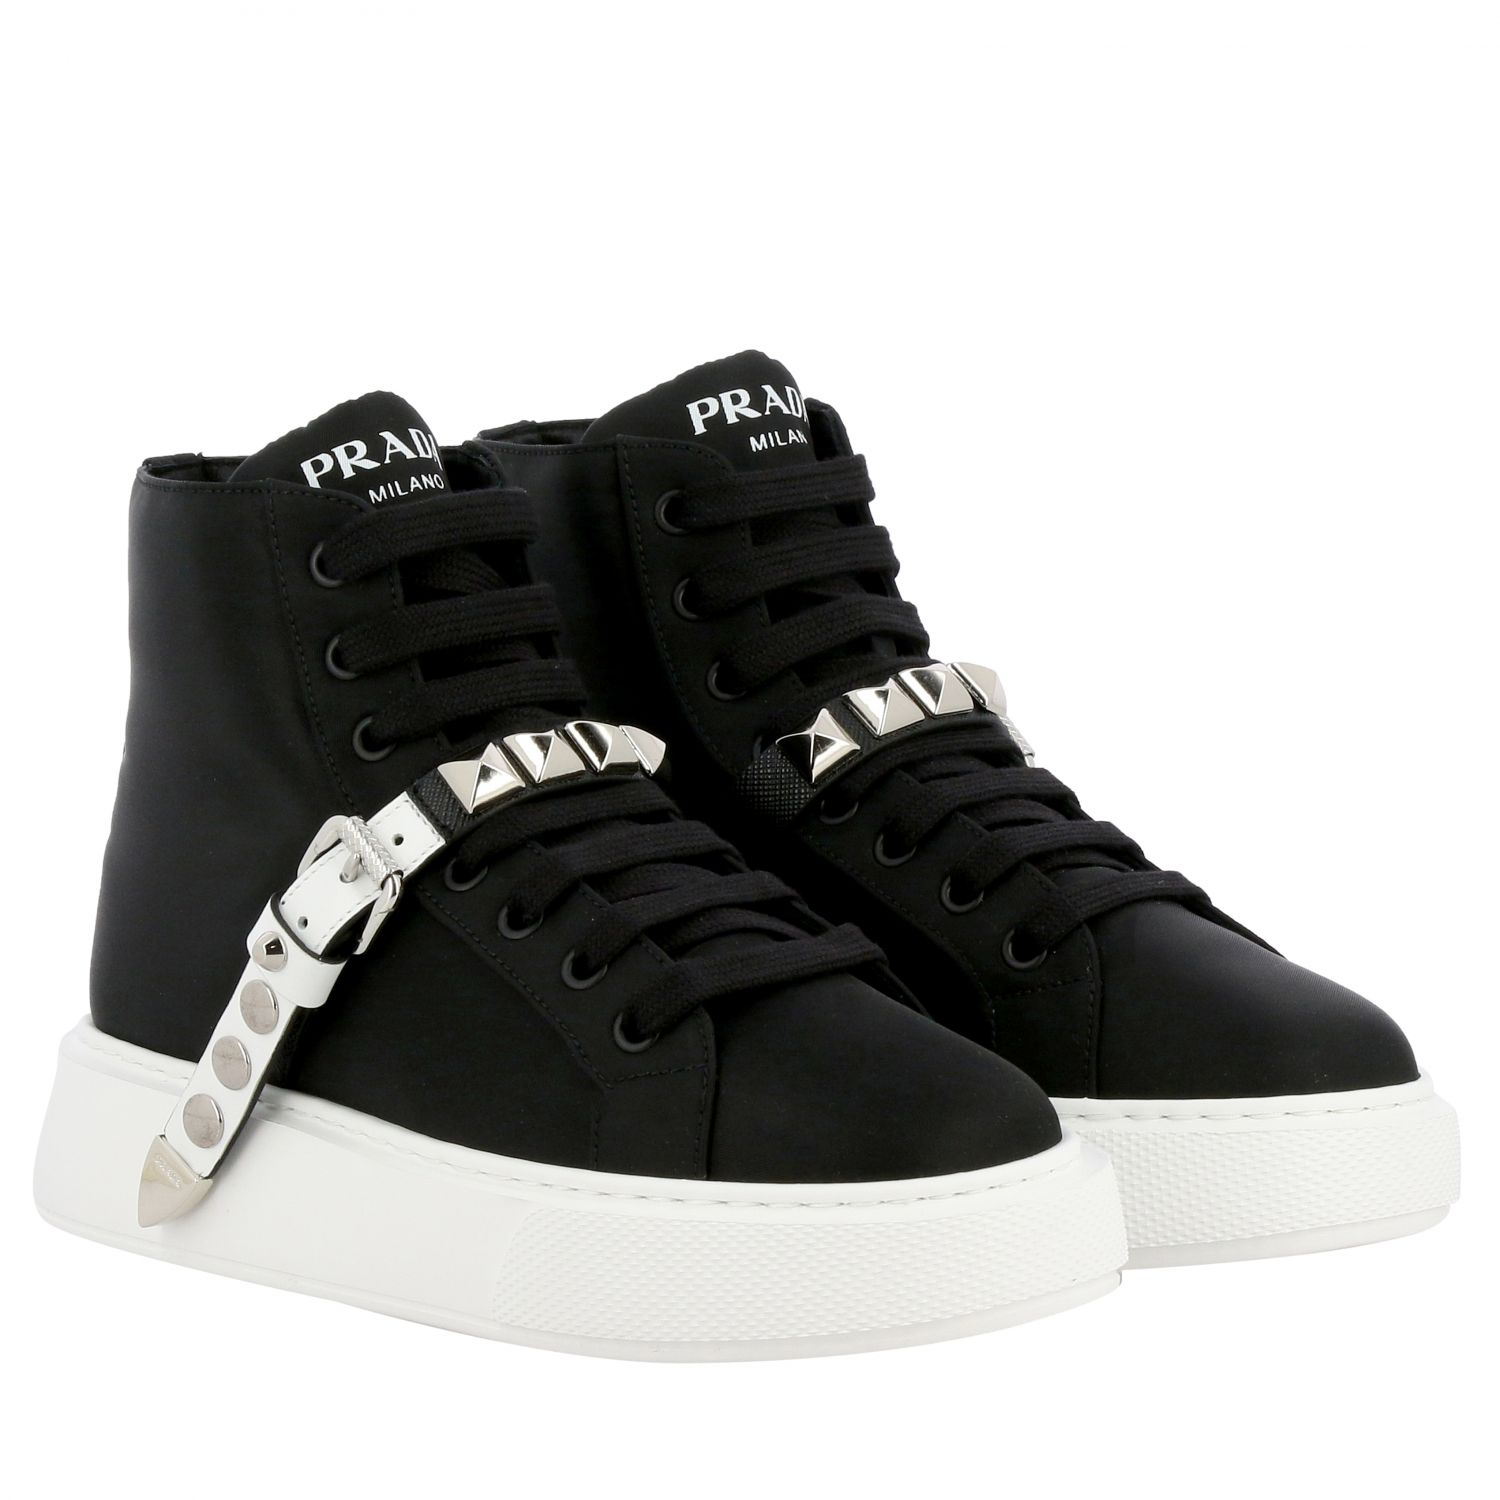 PRADA: sneakers for women - Black | Prada sneakers 1T692L W08 online on ...